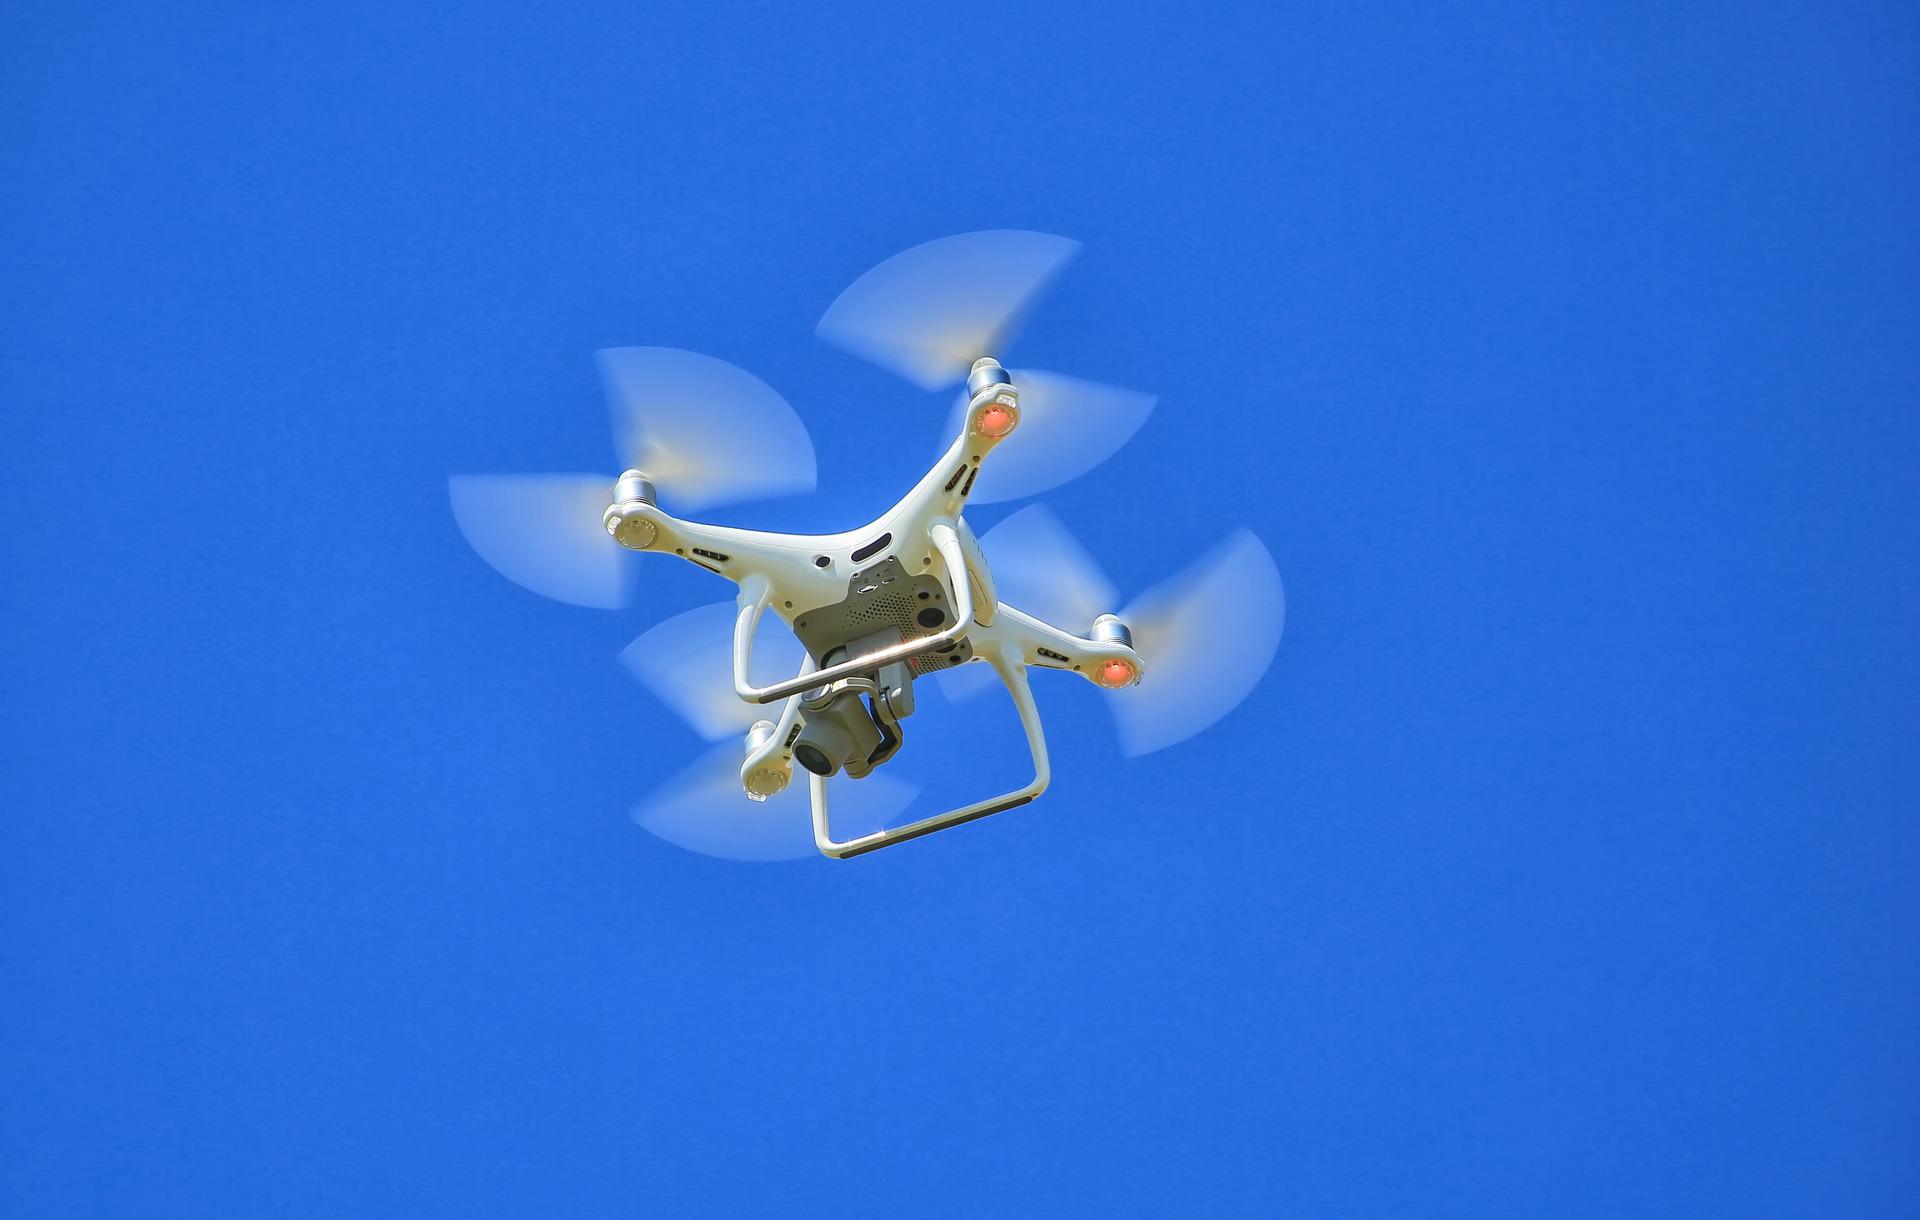 High-resolution radar can detect drones